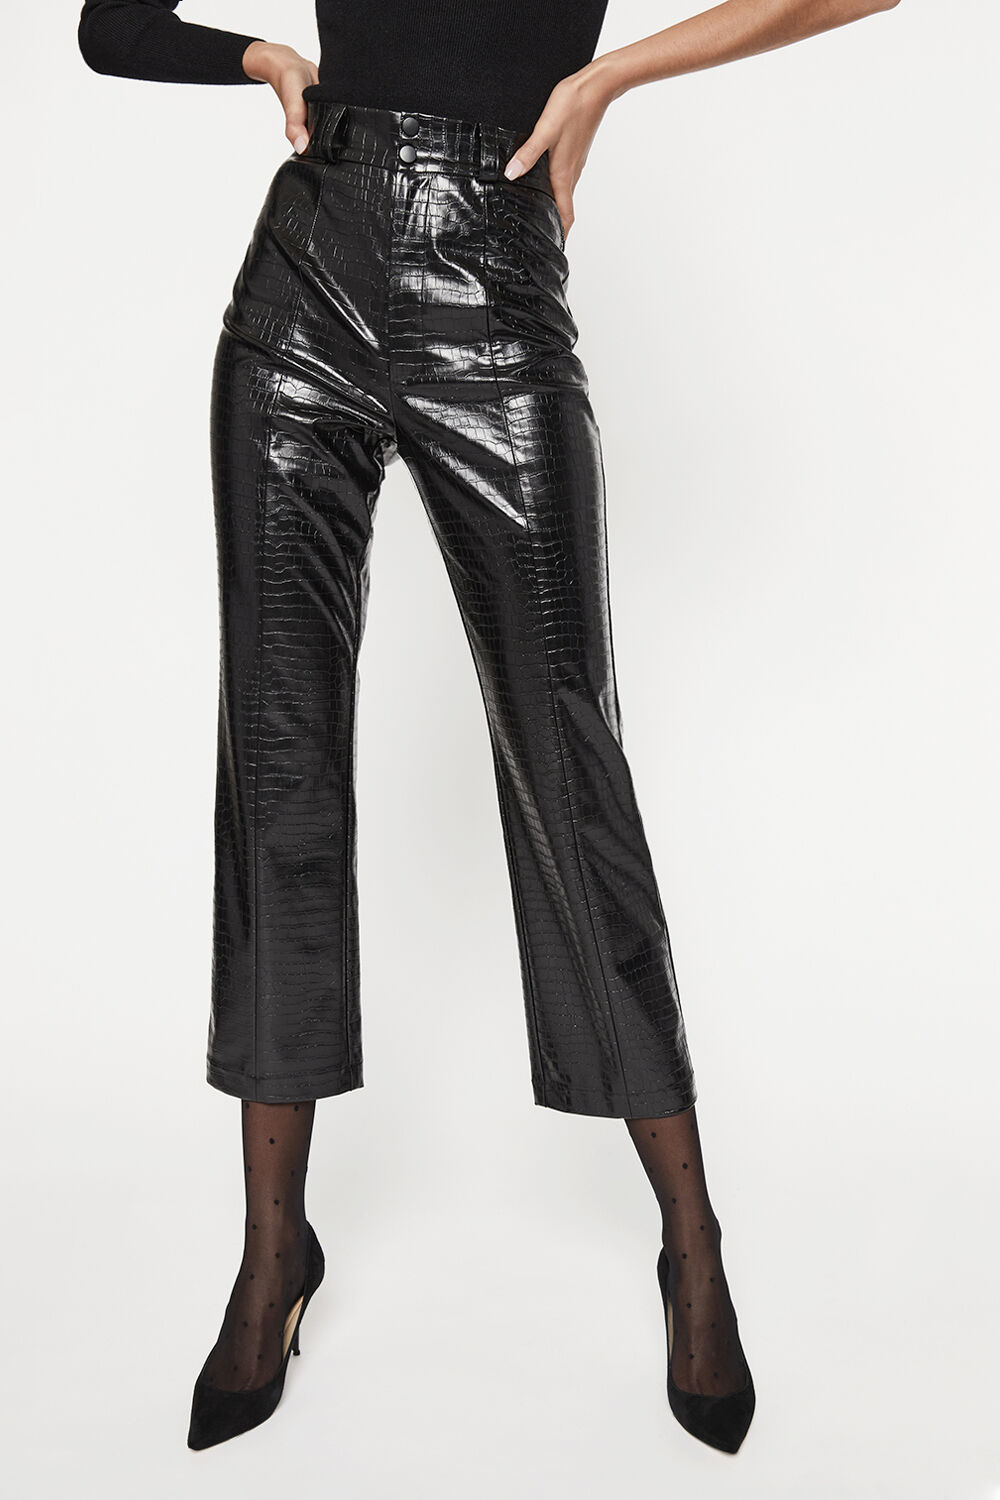 Croc Vegan Leather Pant in Croc Black | Bardot